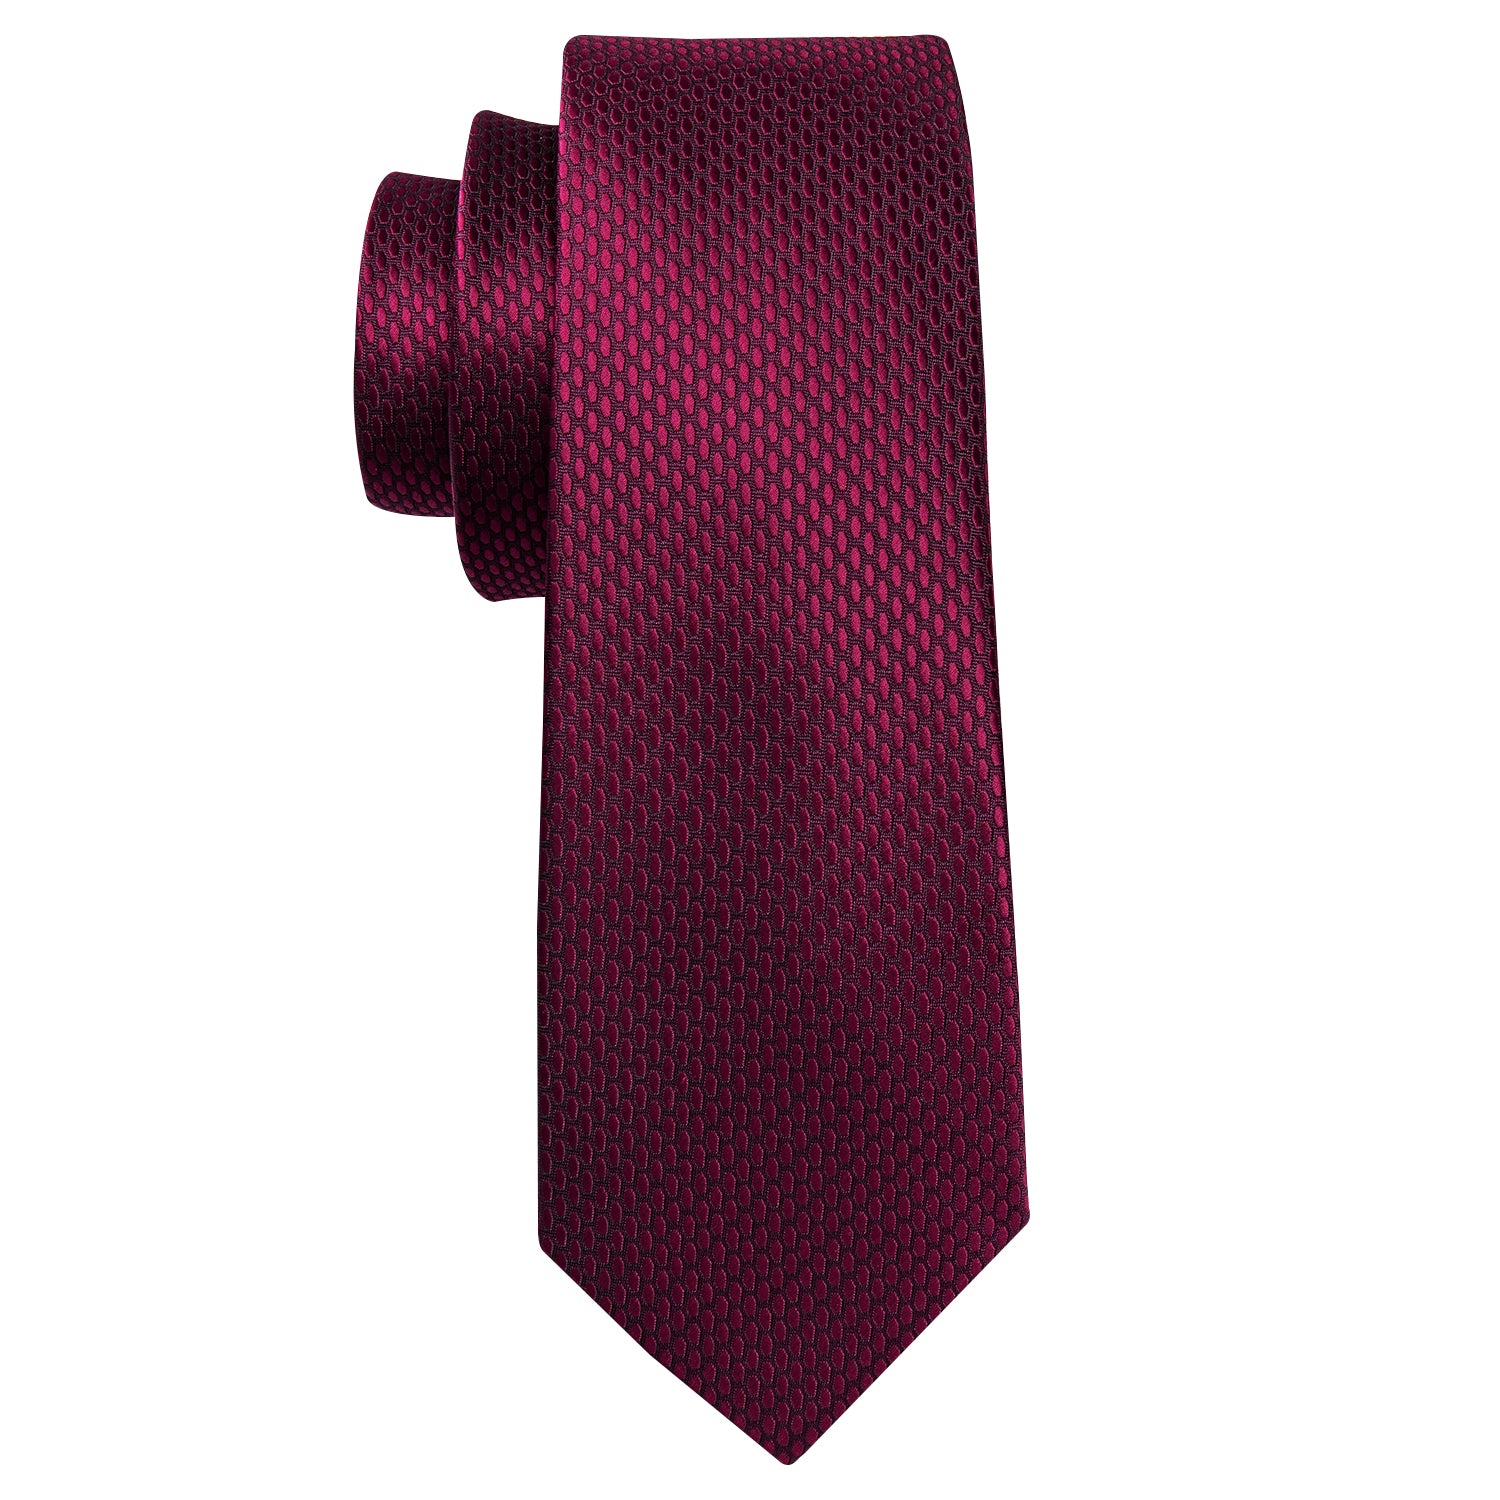 Barry.wang Red Tie  Navy-Blue Geometric Polka Dot Tie Pocket Square Cufflinks Set